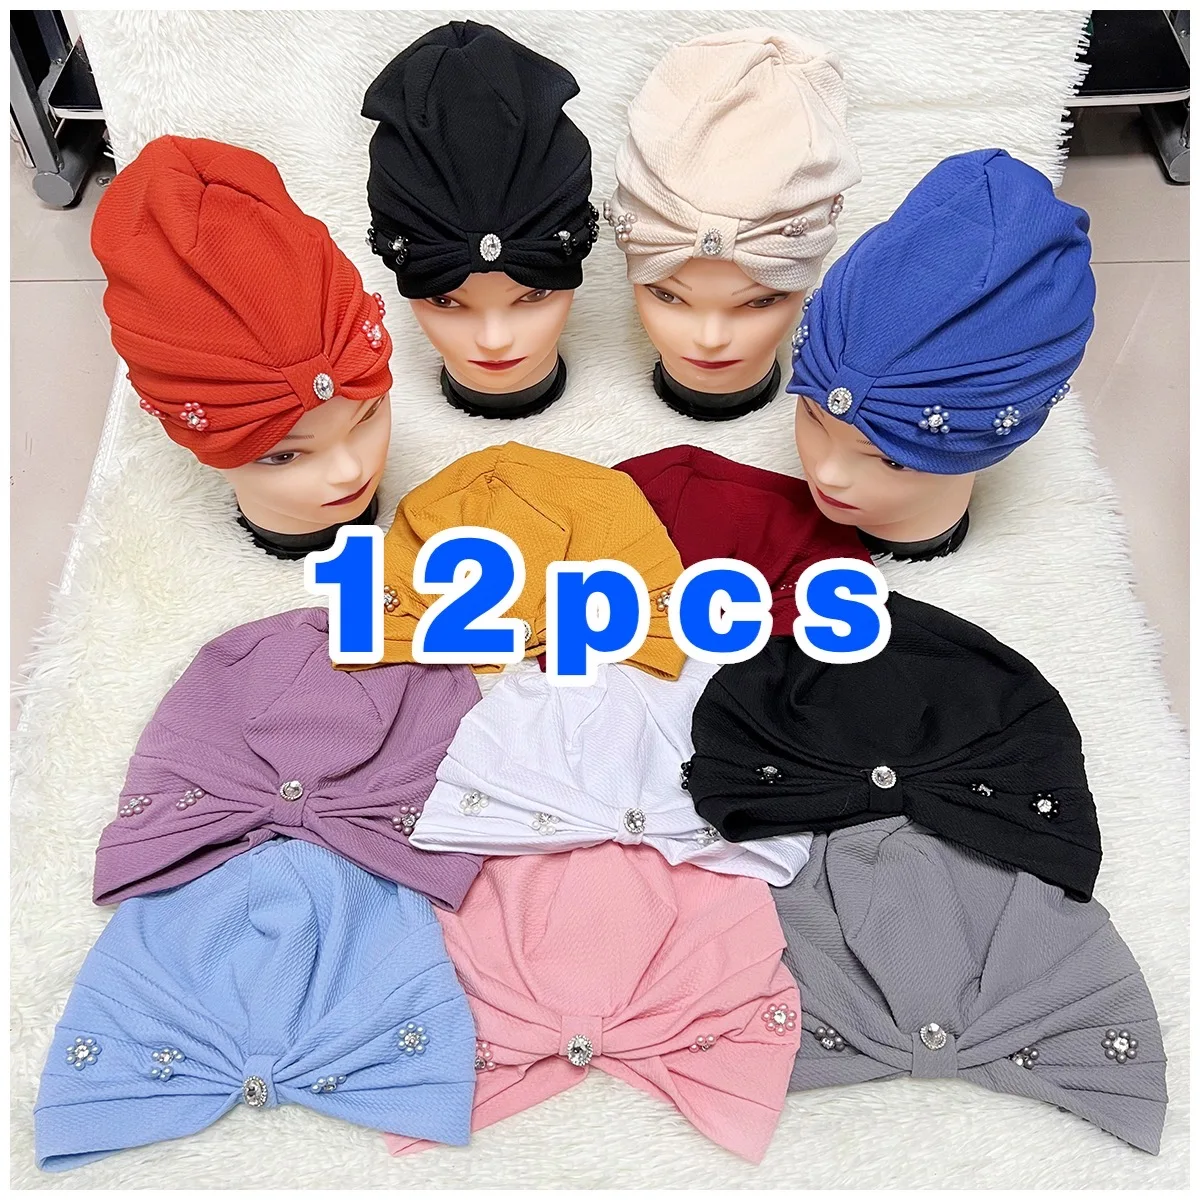 

12pcs Latest Fashion Muslim Female Turban Hat Bonnet Elastic FabricHot Rhinestone Solid Indian Beanie Hair Bonnets Cap For Women